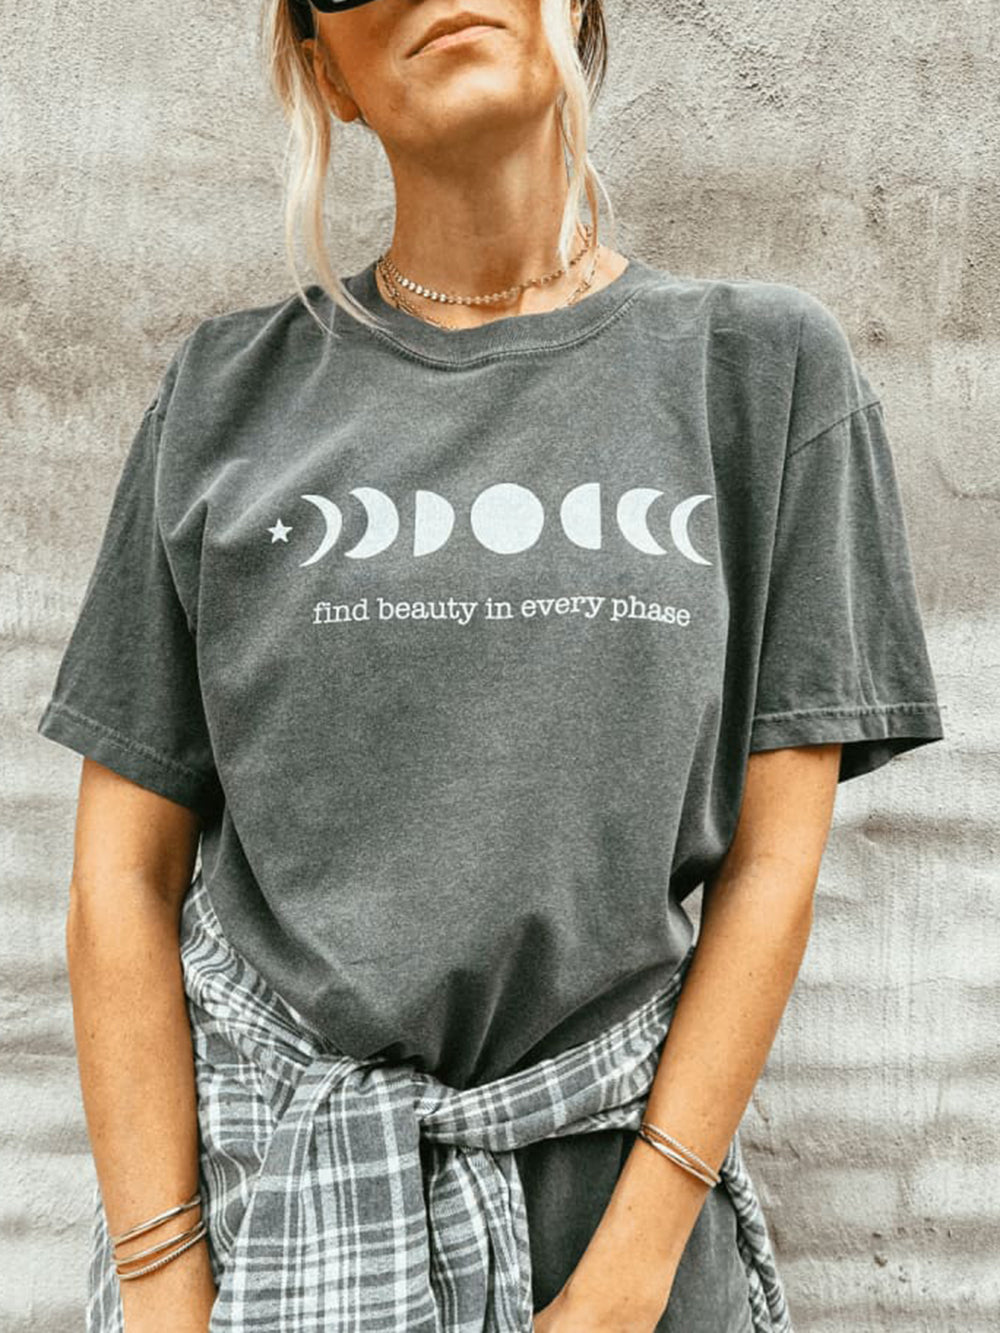 T-Shirt mit Mondphasen-Grafik